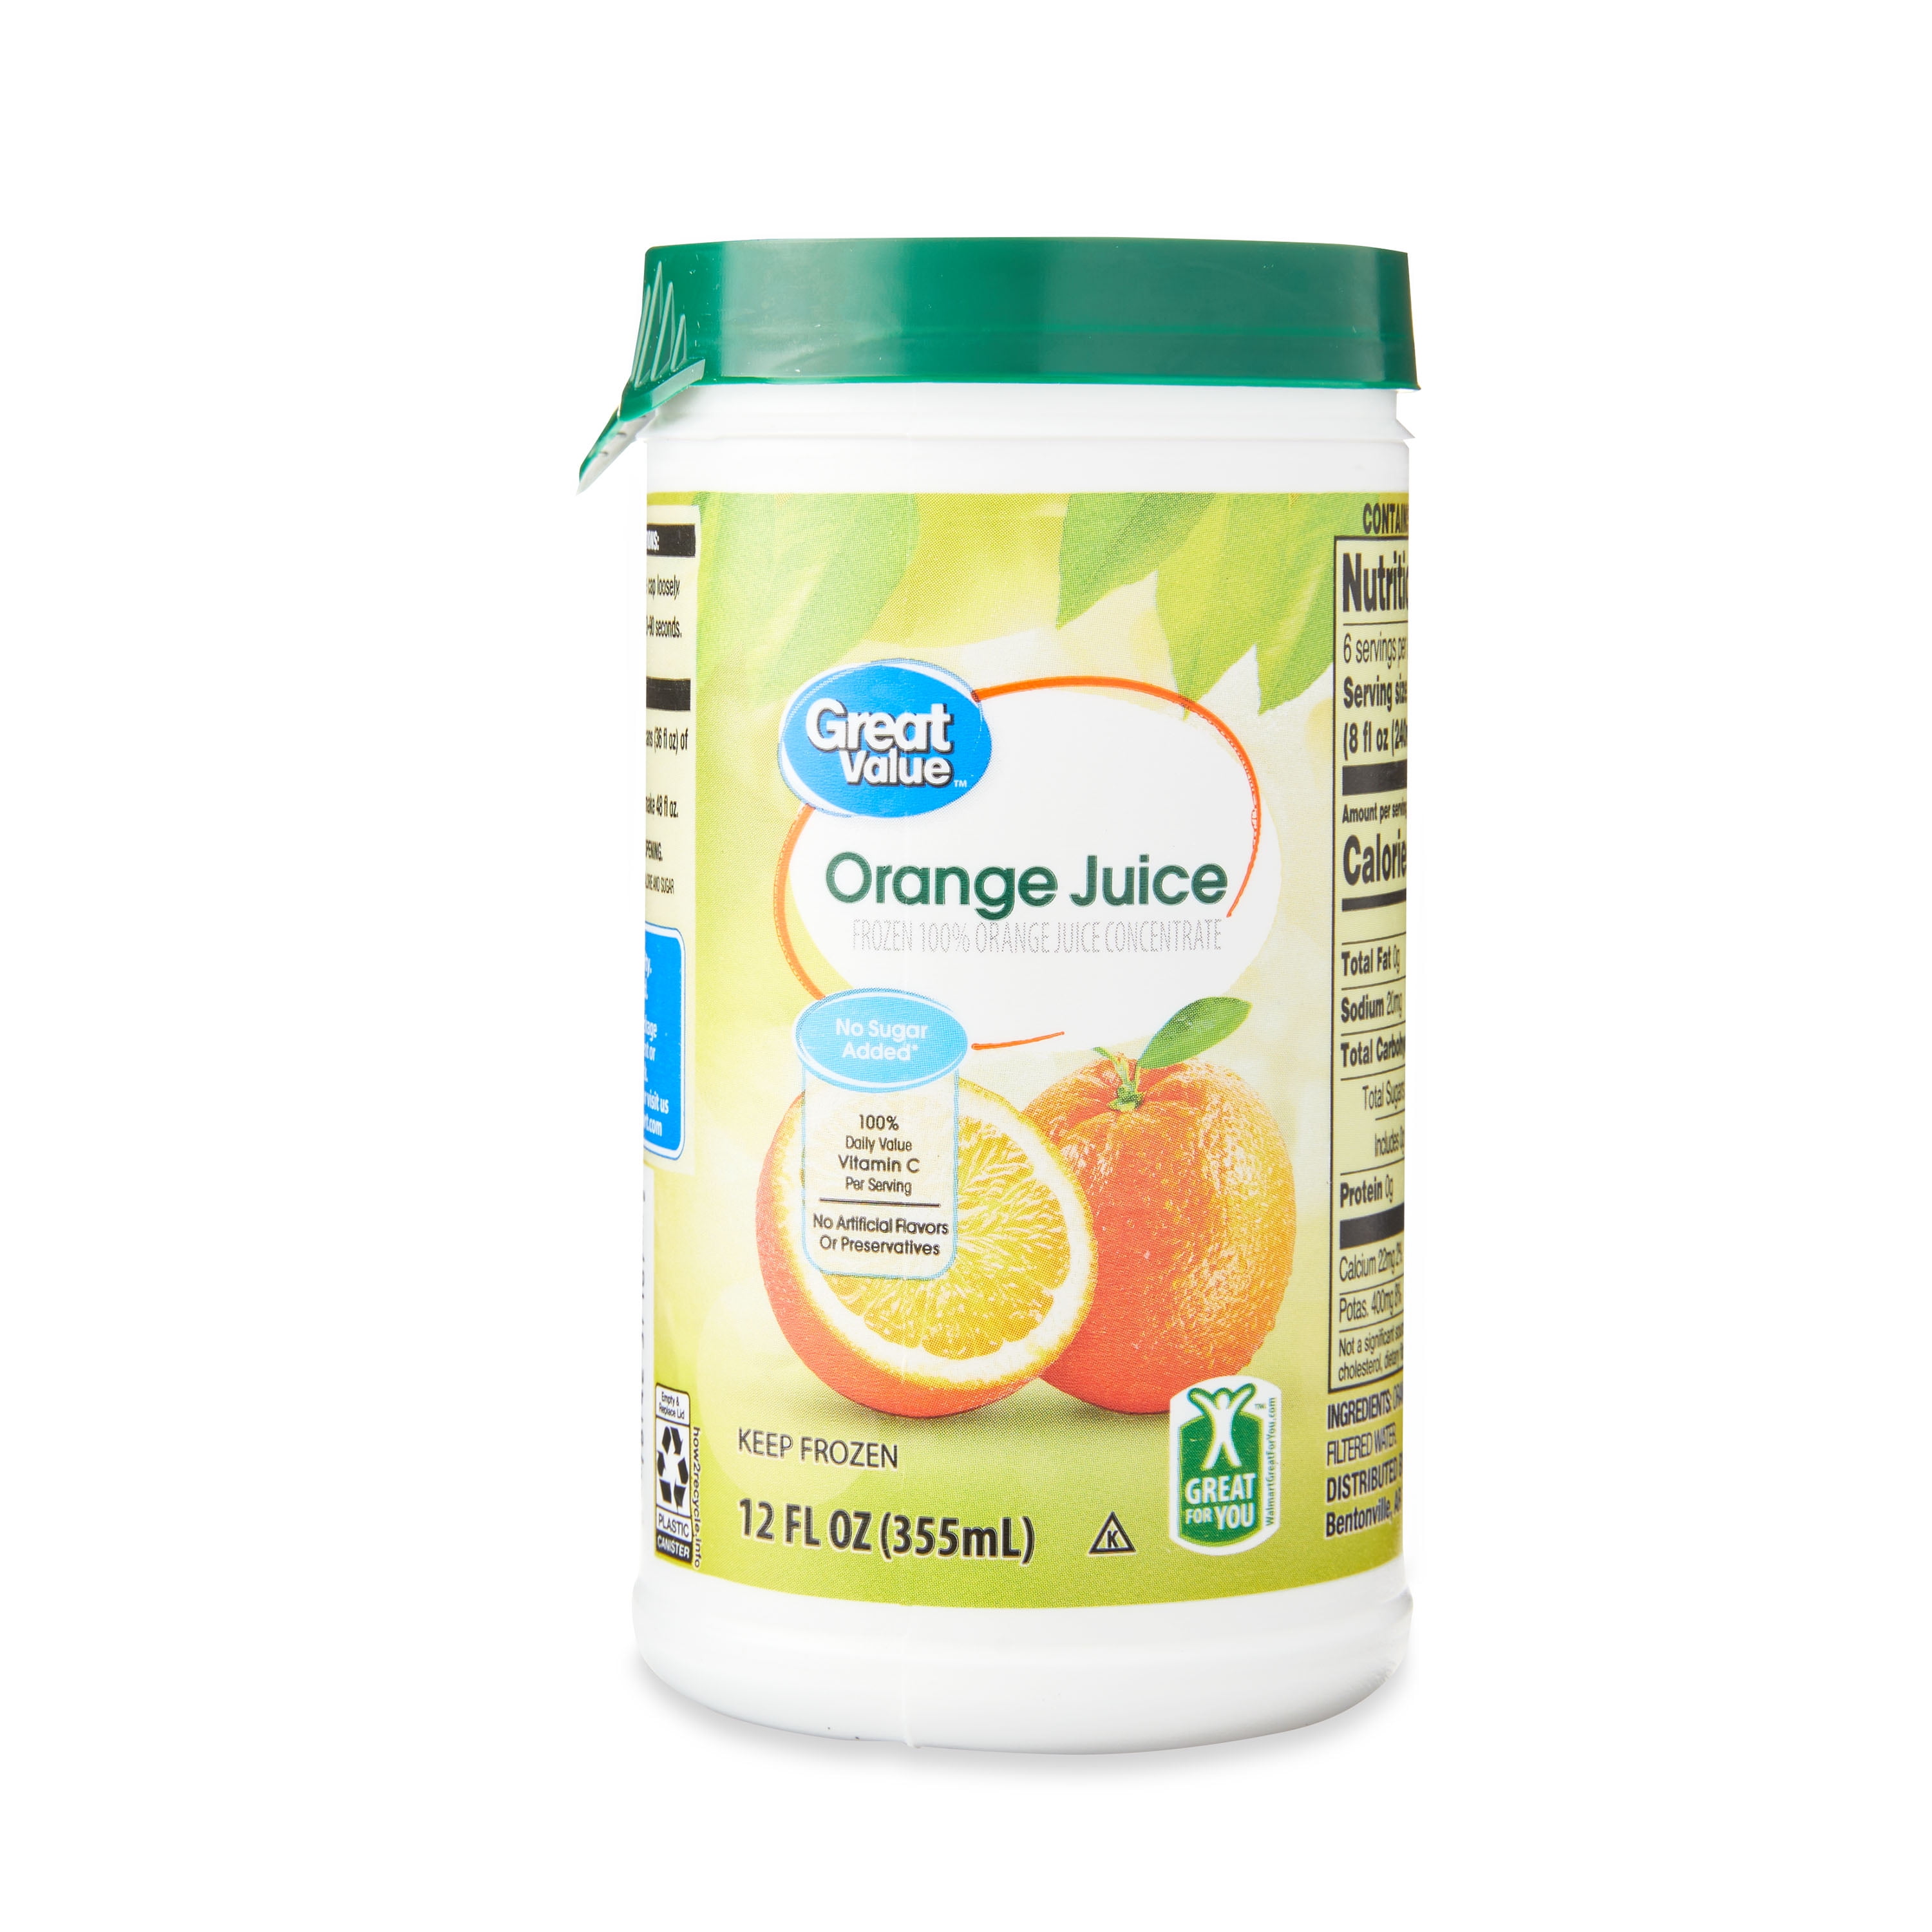 Great Value Frozen Orange Juice, 12 fl oz